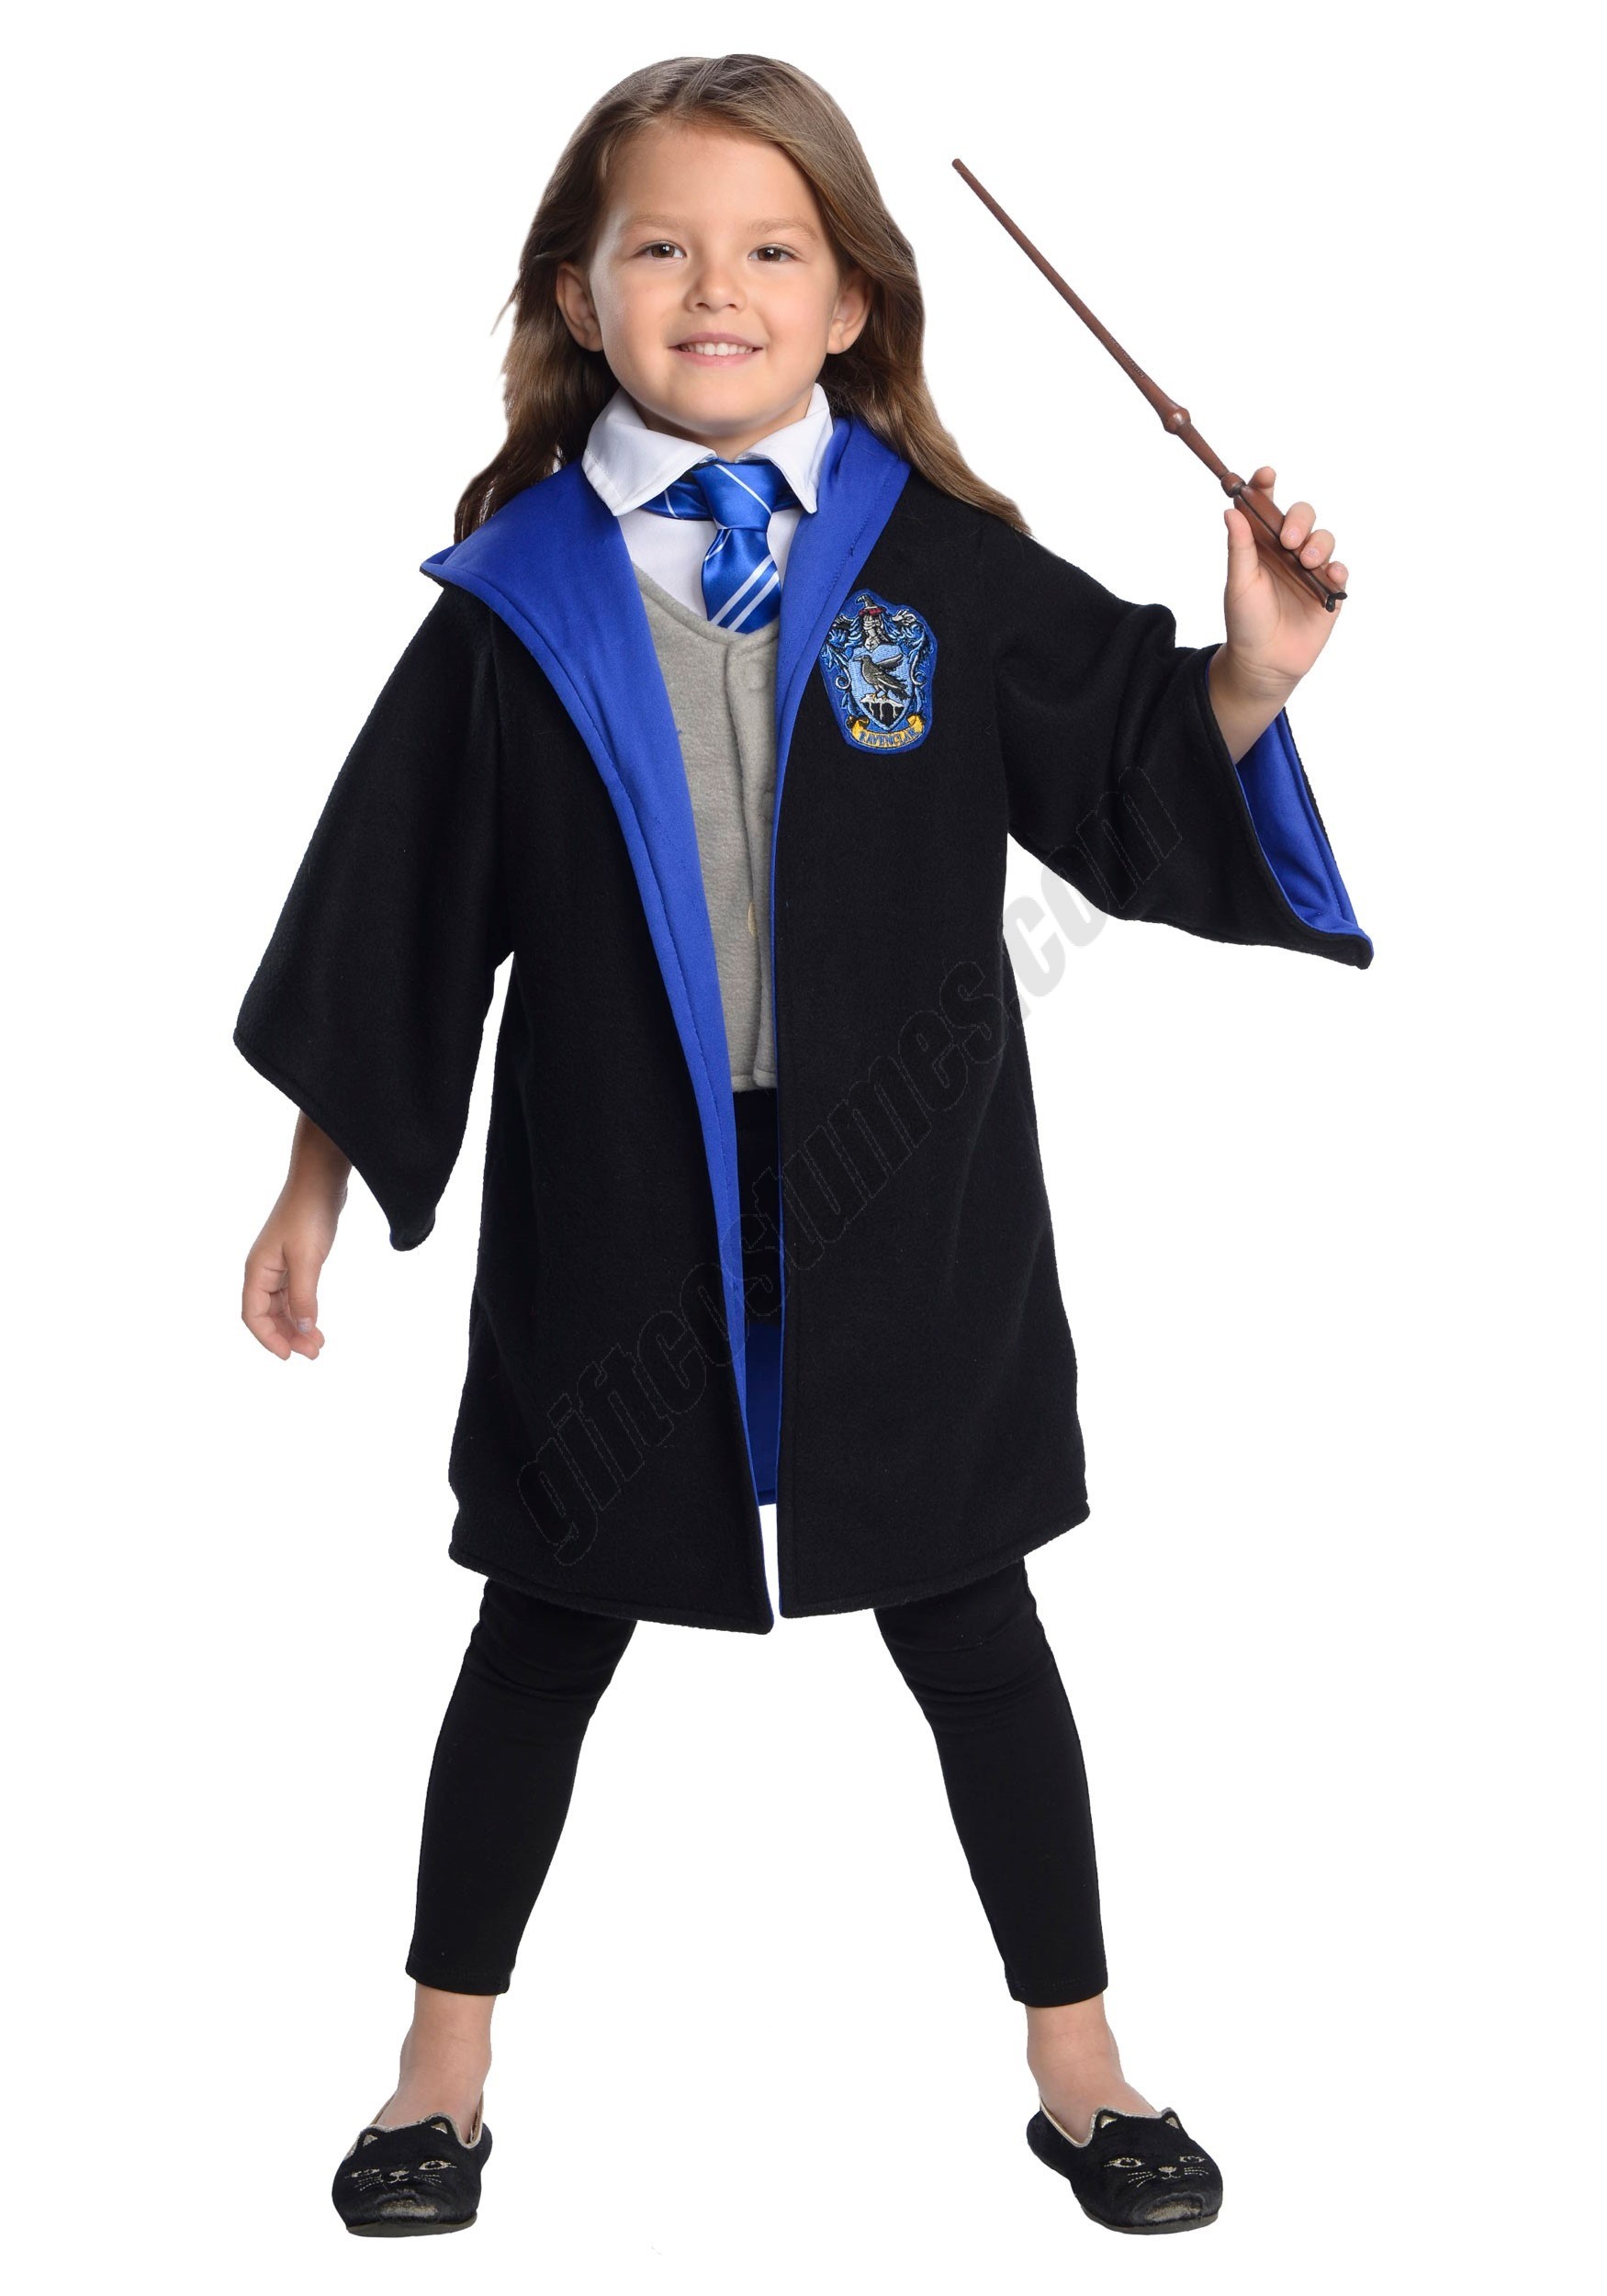 Harry Potter Toddler Ravenclaw Costume Promotions - Harry Potter Toddler Ravenclaw Costume Promotions